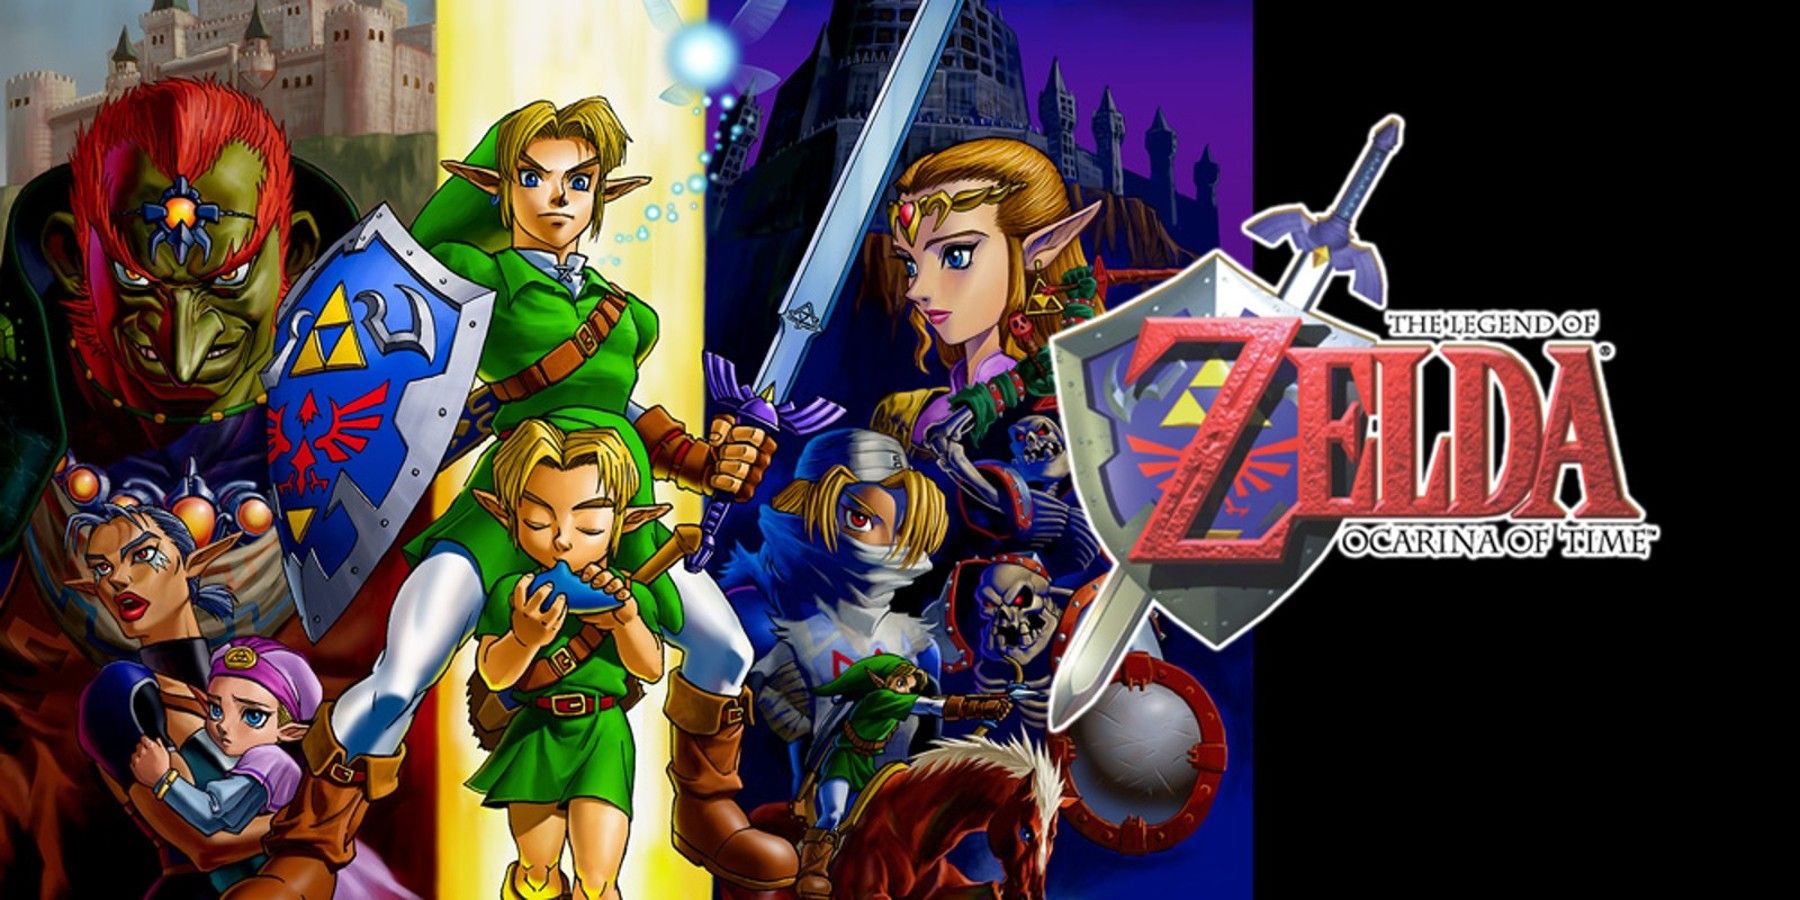 Zelda Ocarina Of Time Switch HD Remake Rumoured For 2022, ocarina of time  zelda switch 